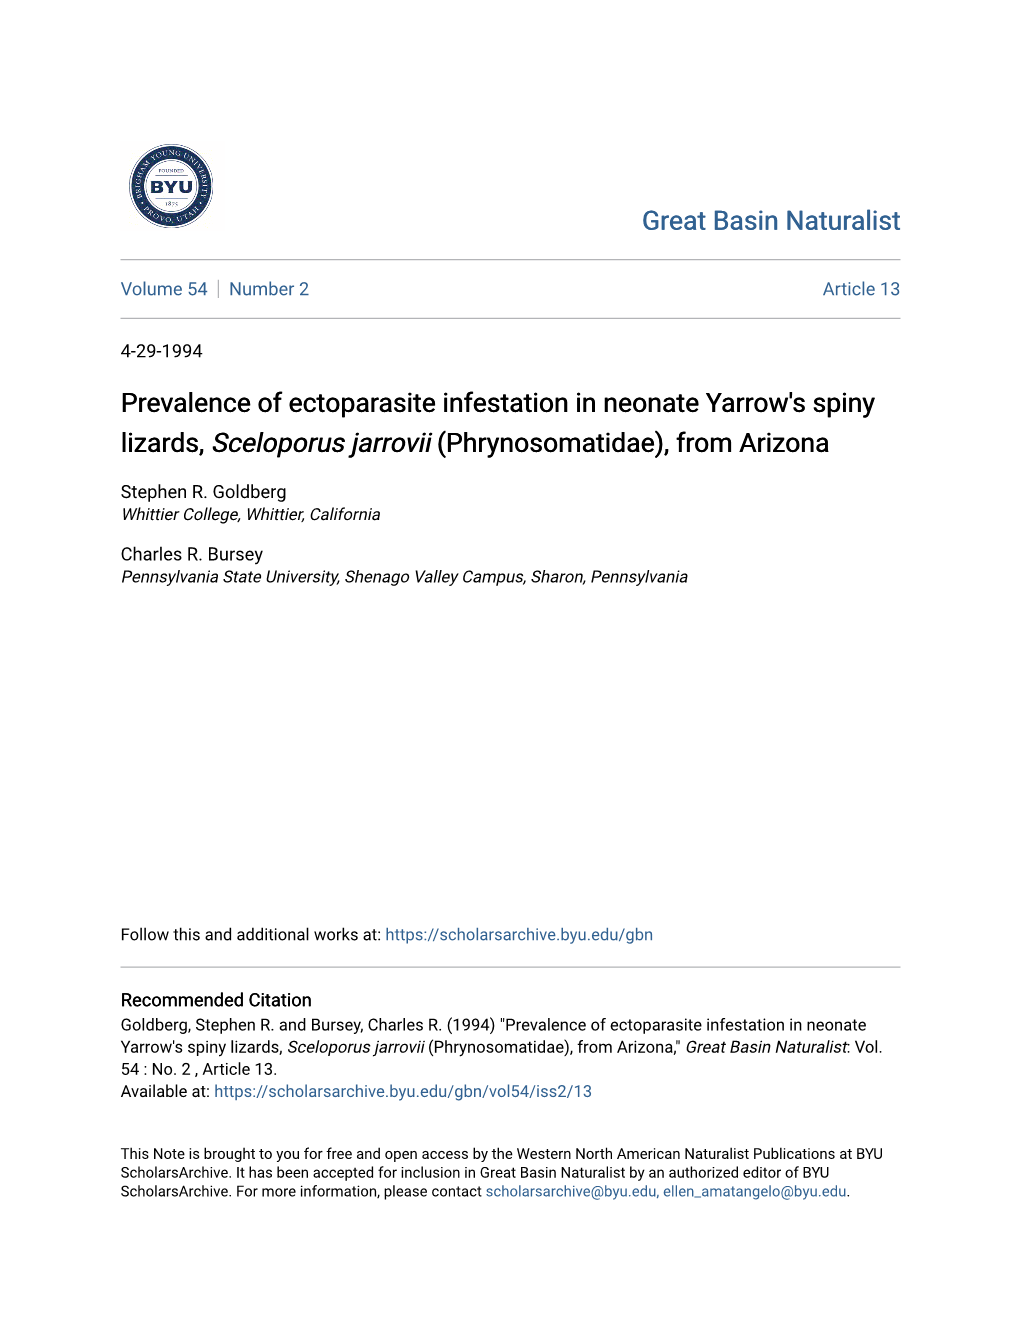 Prevalence of Ectoparasite Infestation in Neonate Yarrow's Spiny Lizards, Sceloporus Jarrovii (Phrynosomatidae), from Arizona